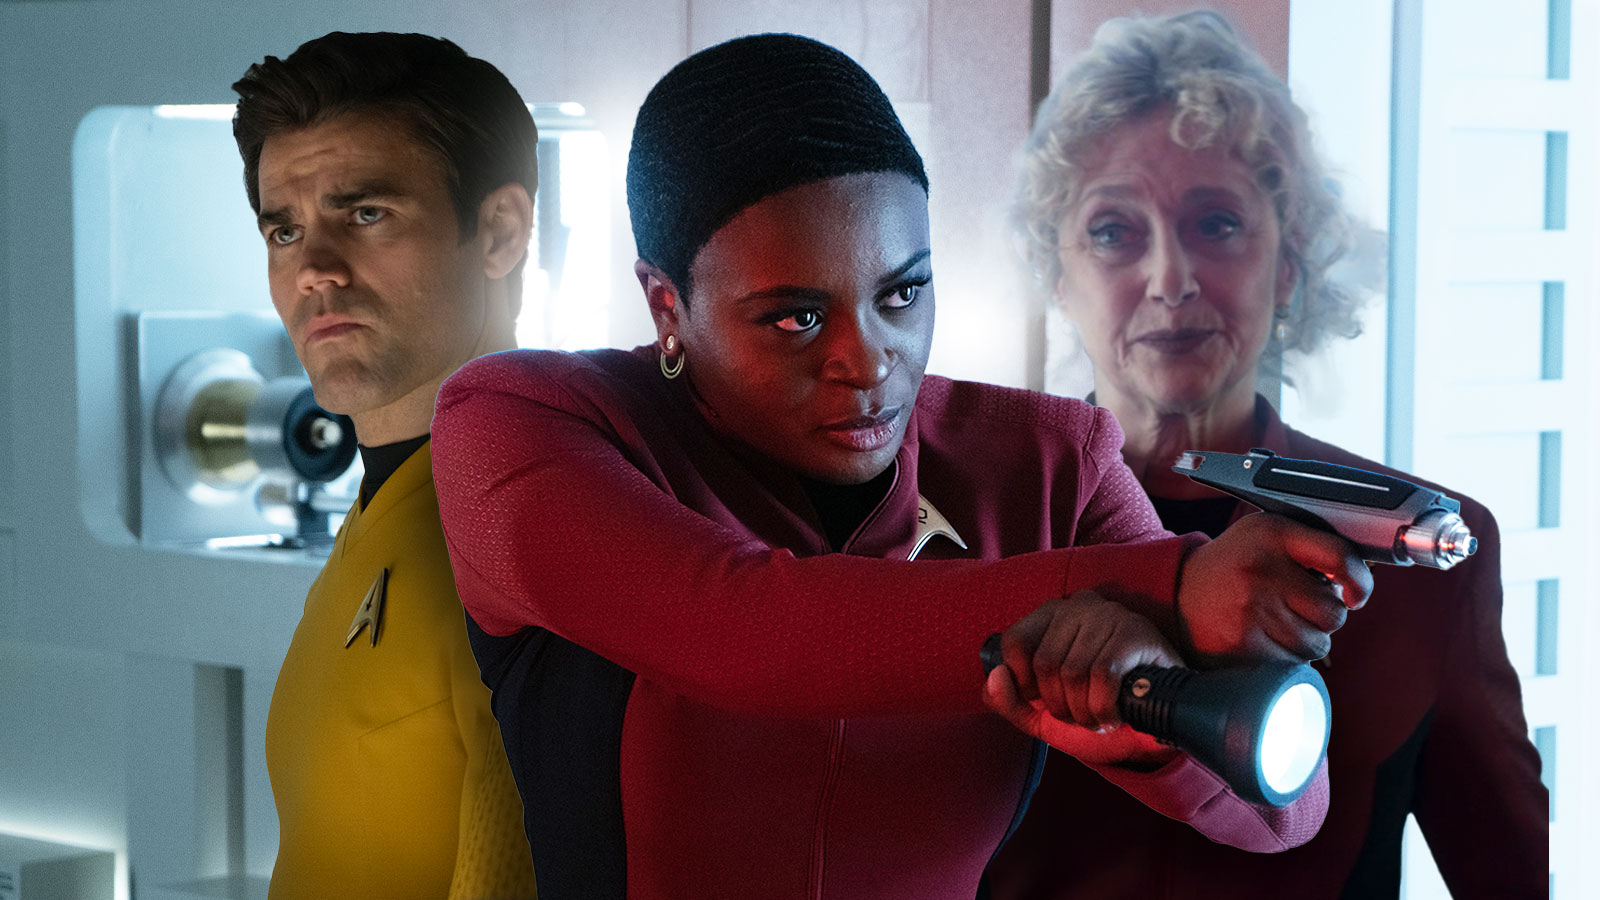 Star Trek: Strange New Worlds "Lost in Translation" preview + new photos